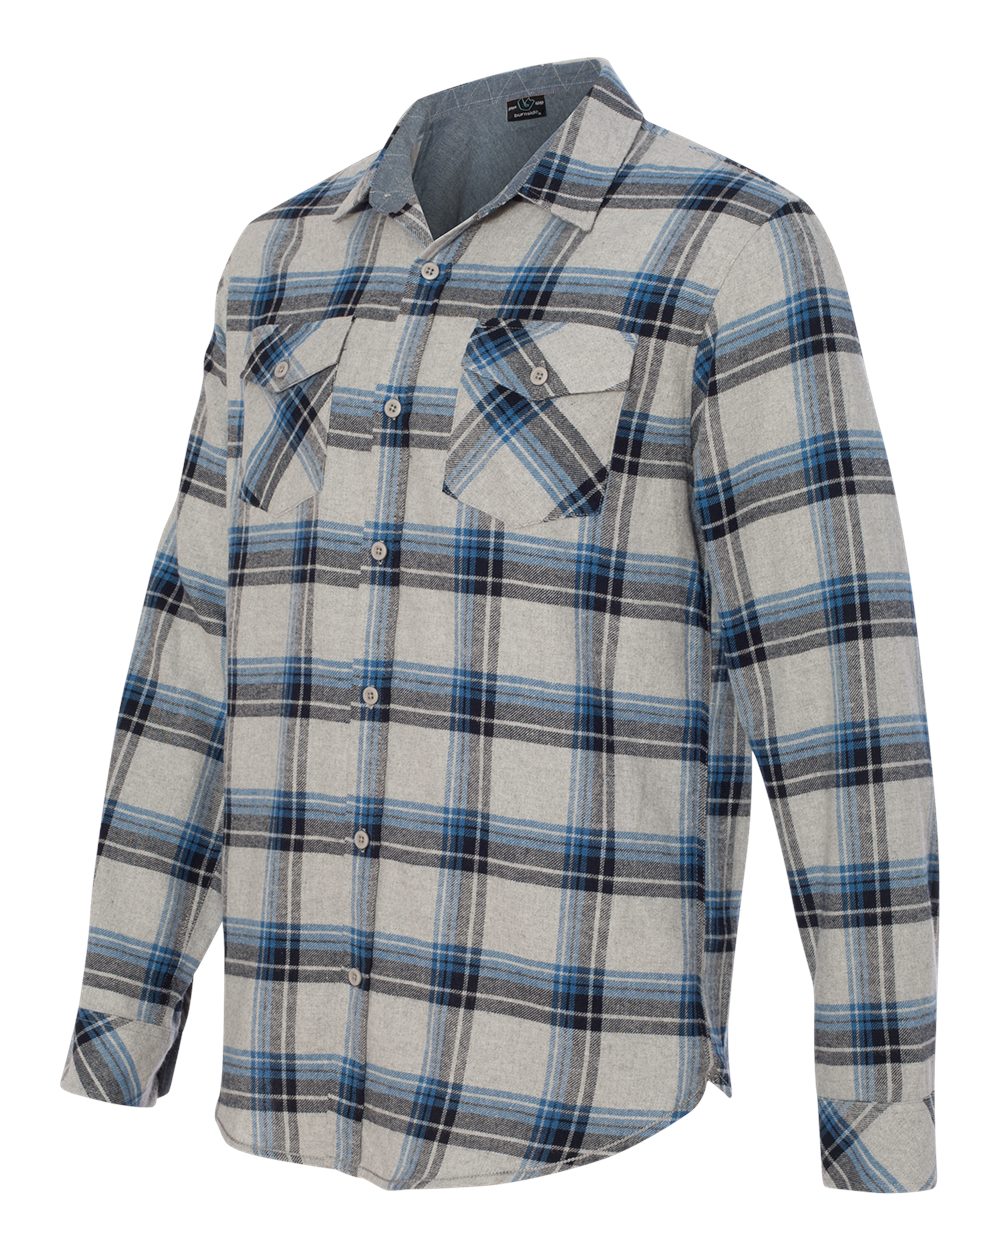 Sample Long Sleeve Flannel Shirt